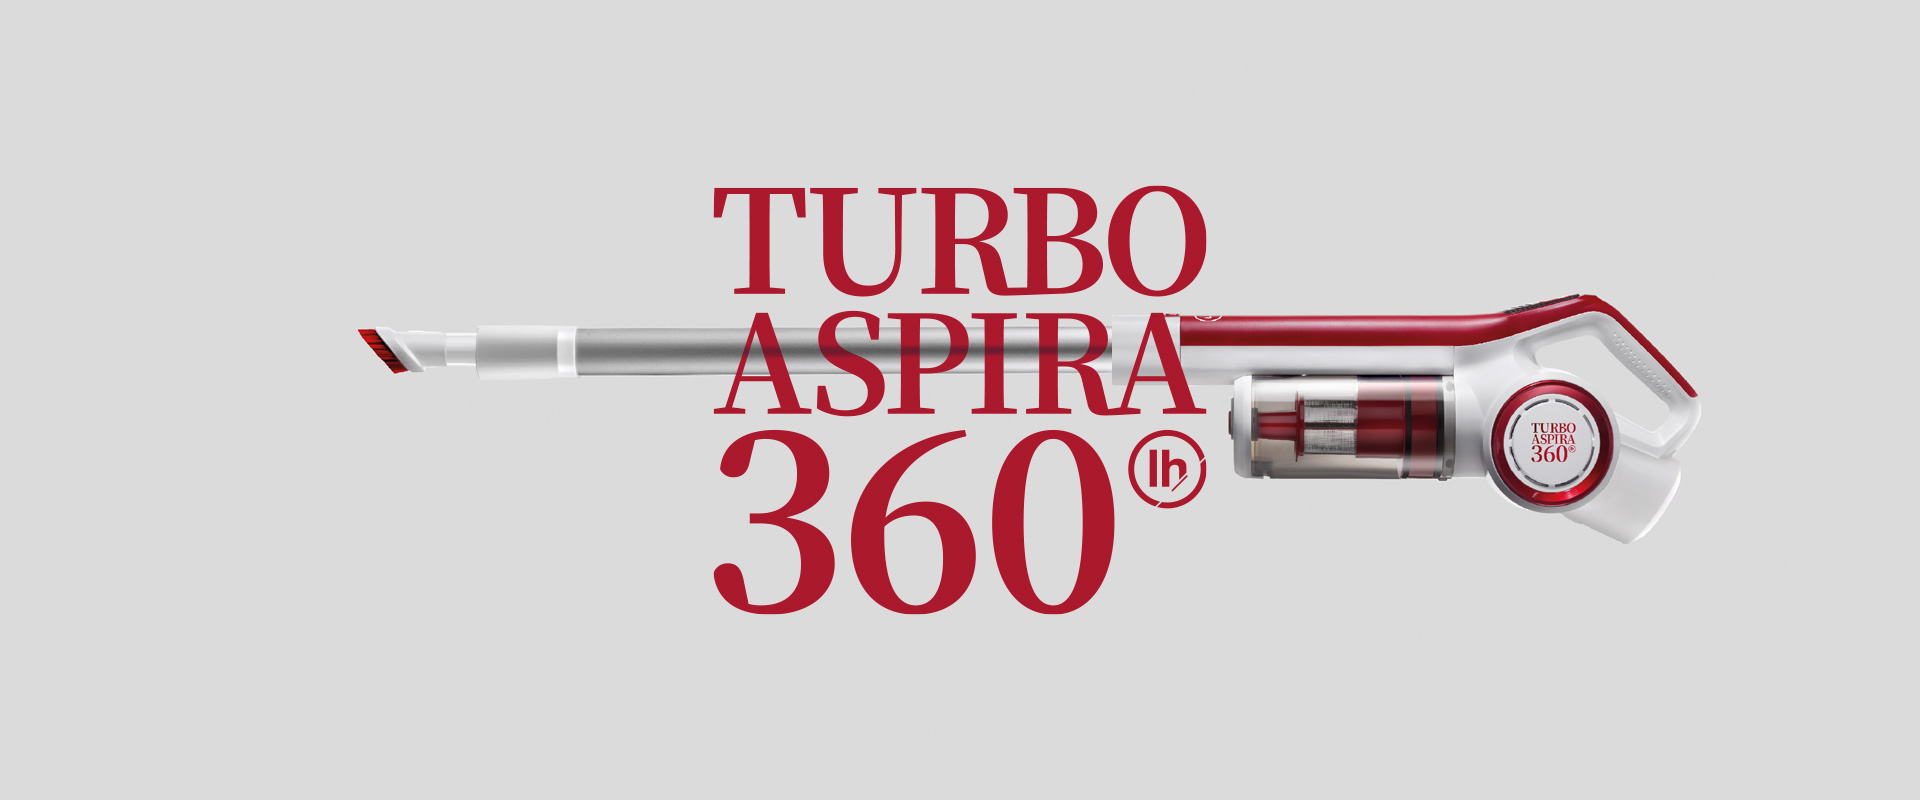 LH TURBO ASPIRA 360 - LUFTHOUS